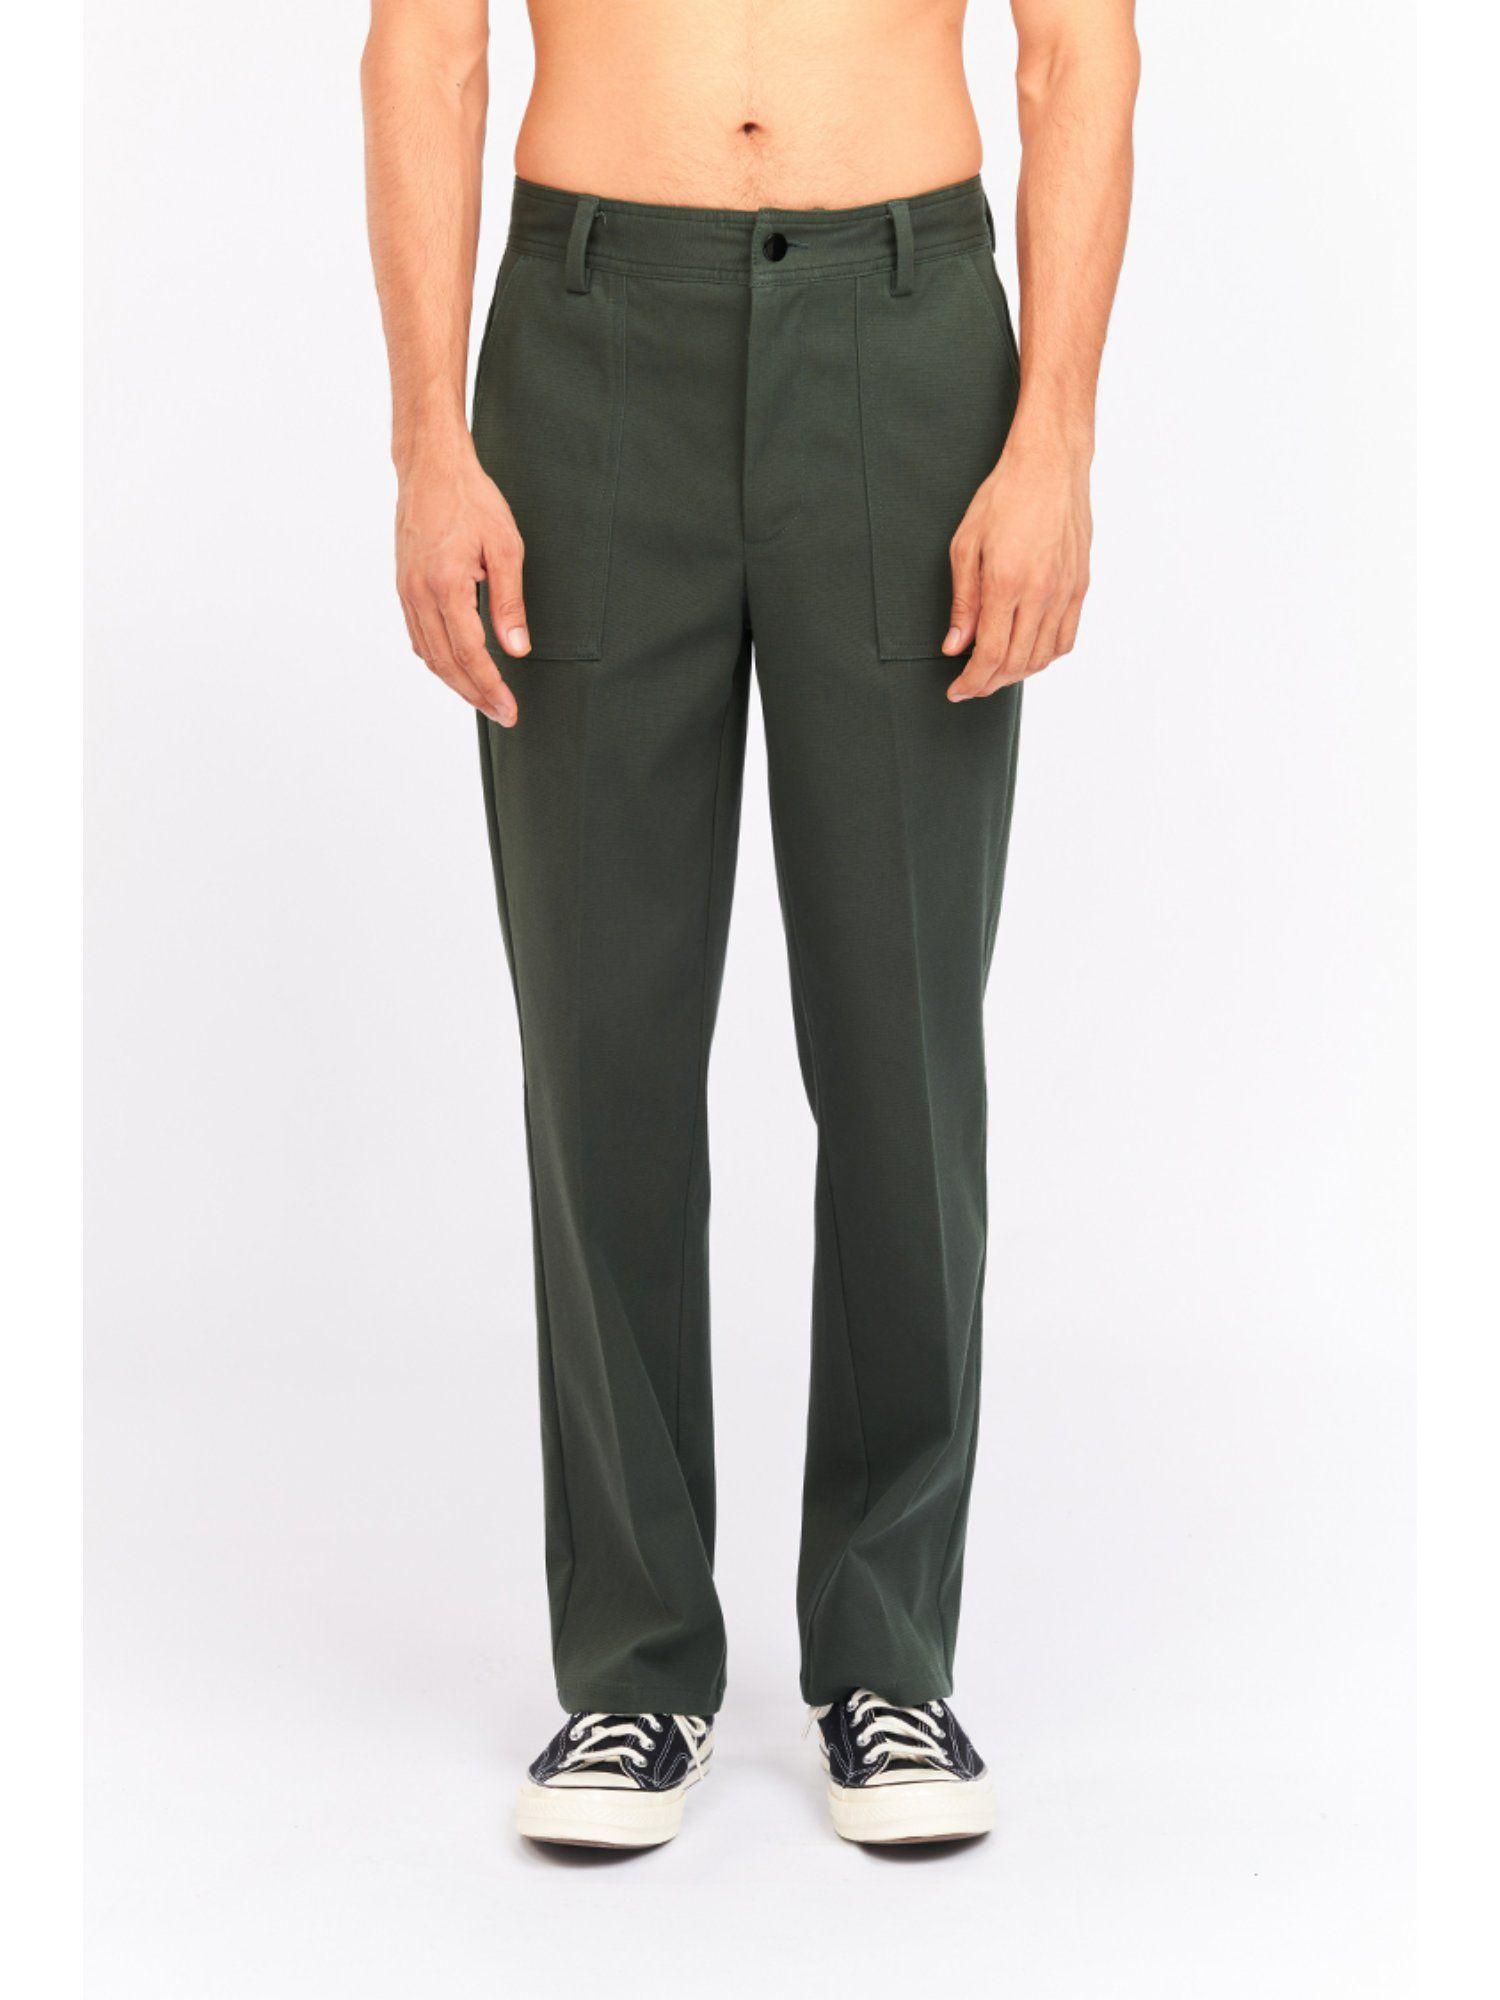 green glenberg pants